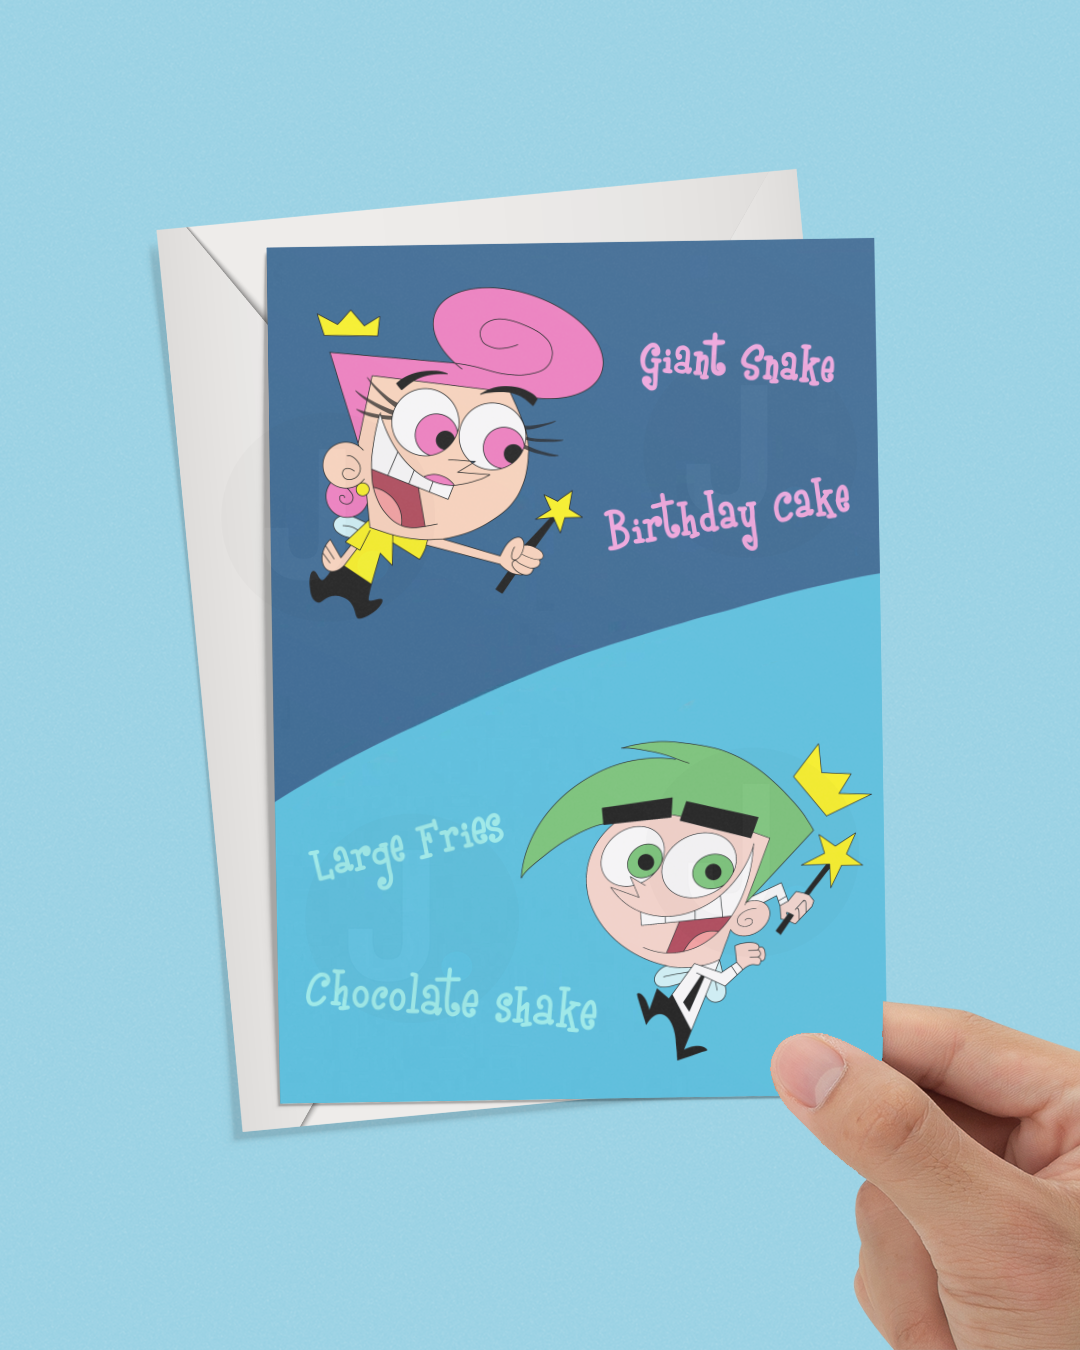 “Giant Snake, Birthday Cake, Large Fries, Chocolate Shake” Birthday Card - Cartoon Fairly Odd Parents Inspired Birthday Card - Fairly Odd Parents Inspired Birthday Card